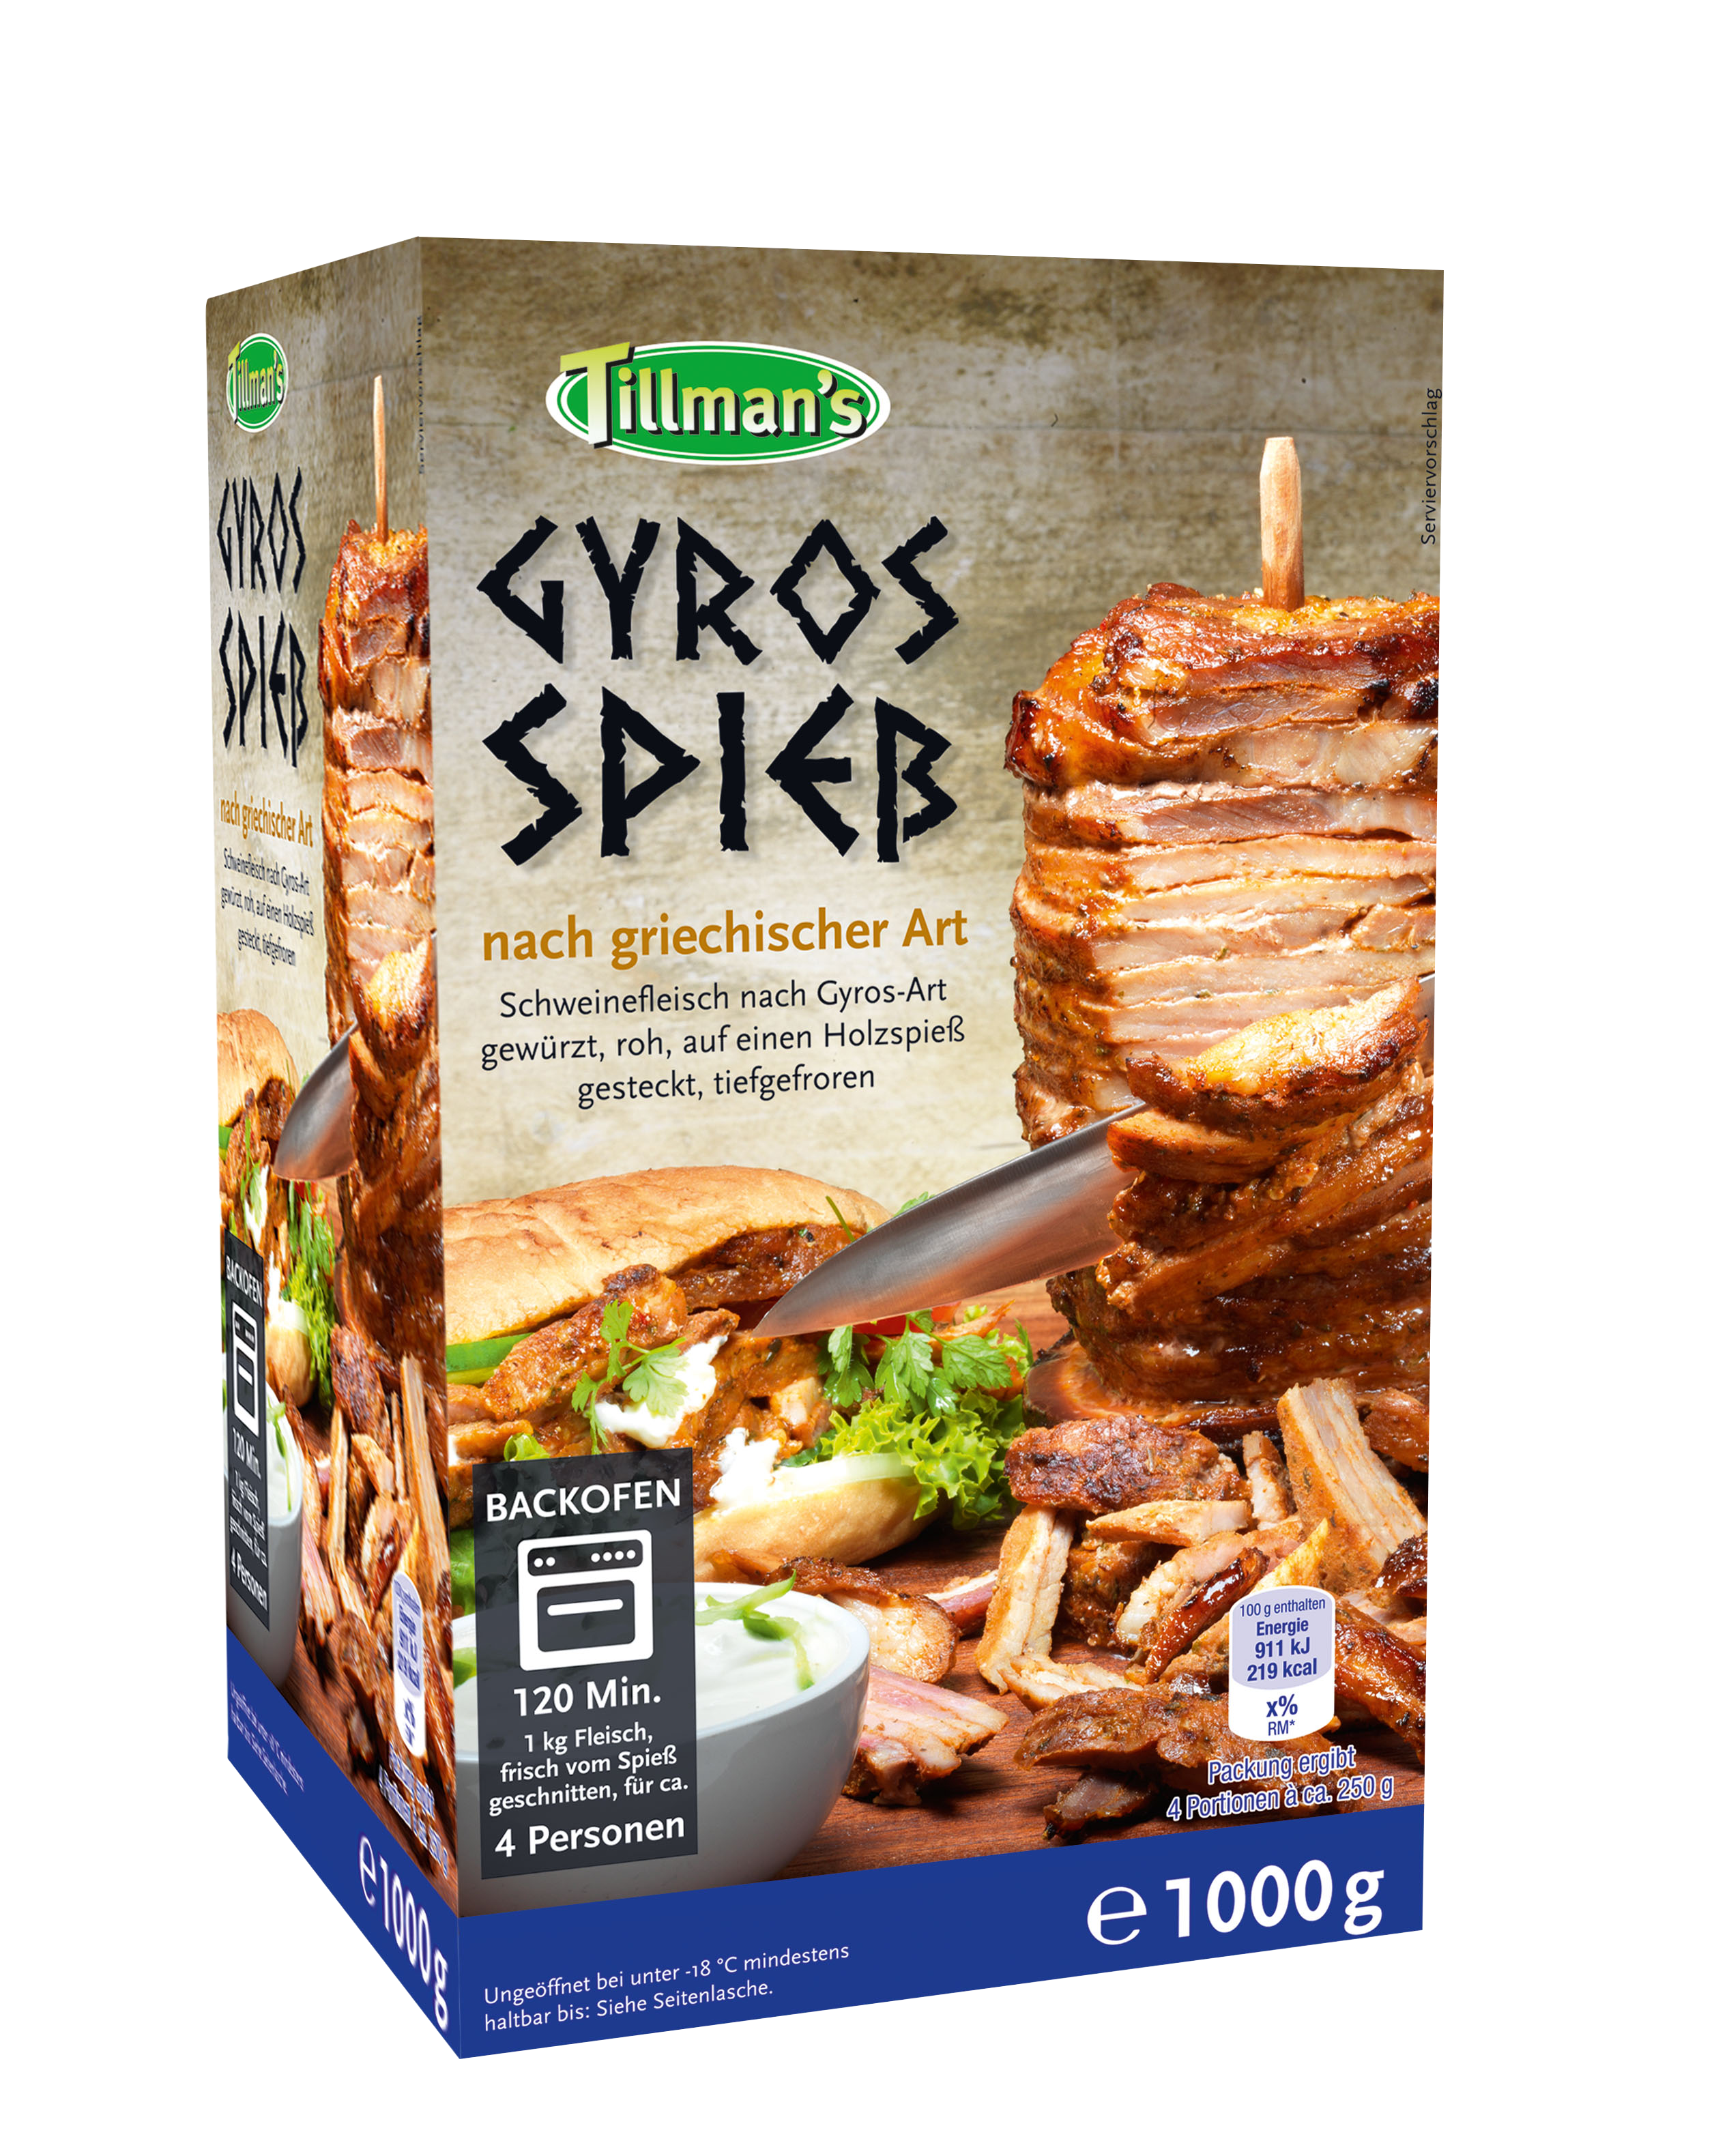 Convenience (1000 · grams) Prepared/Processed Prepared/Processed Tillman\'s Gyros-Spieß - Food / Tobacco Meat/Poultry/Sausages Meat/Poultry Beverage Pork / - mynetfair GmbH